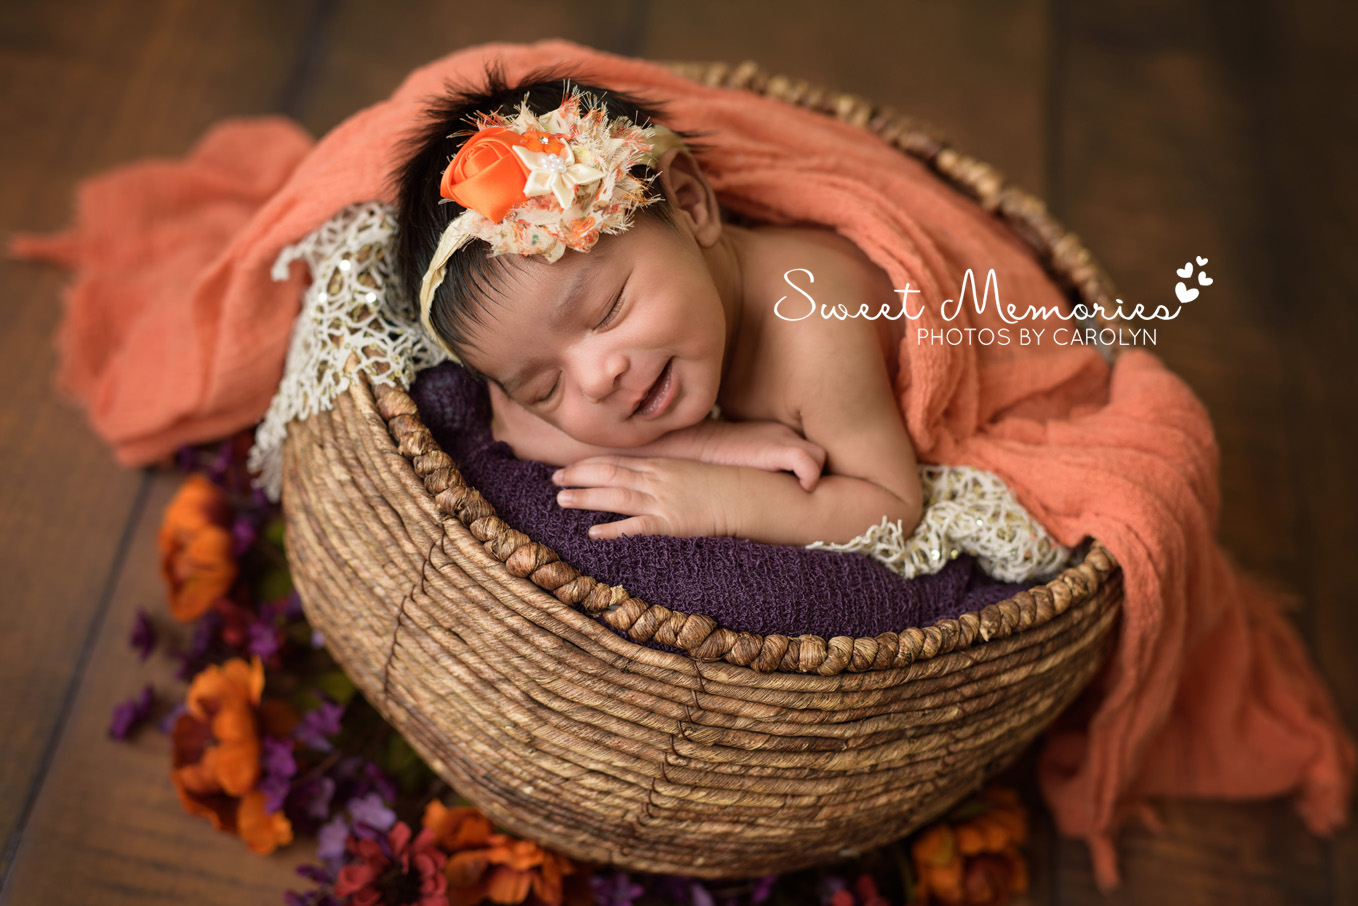 Sweet Memories Photos by Carolyn | Newtown PA | Bucks County Montgomery County Newborn Infant Baby Photographer | Indian newborn baby girl smiling in basket | purple orange gold